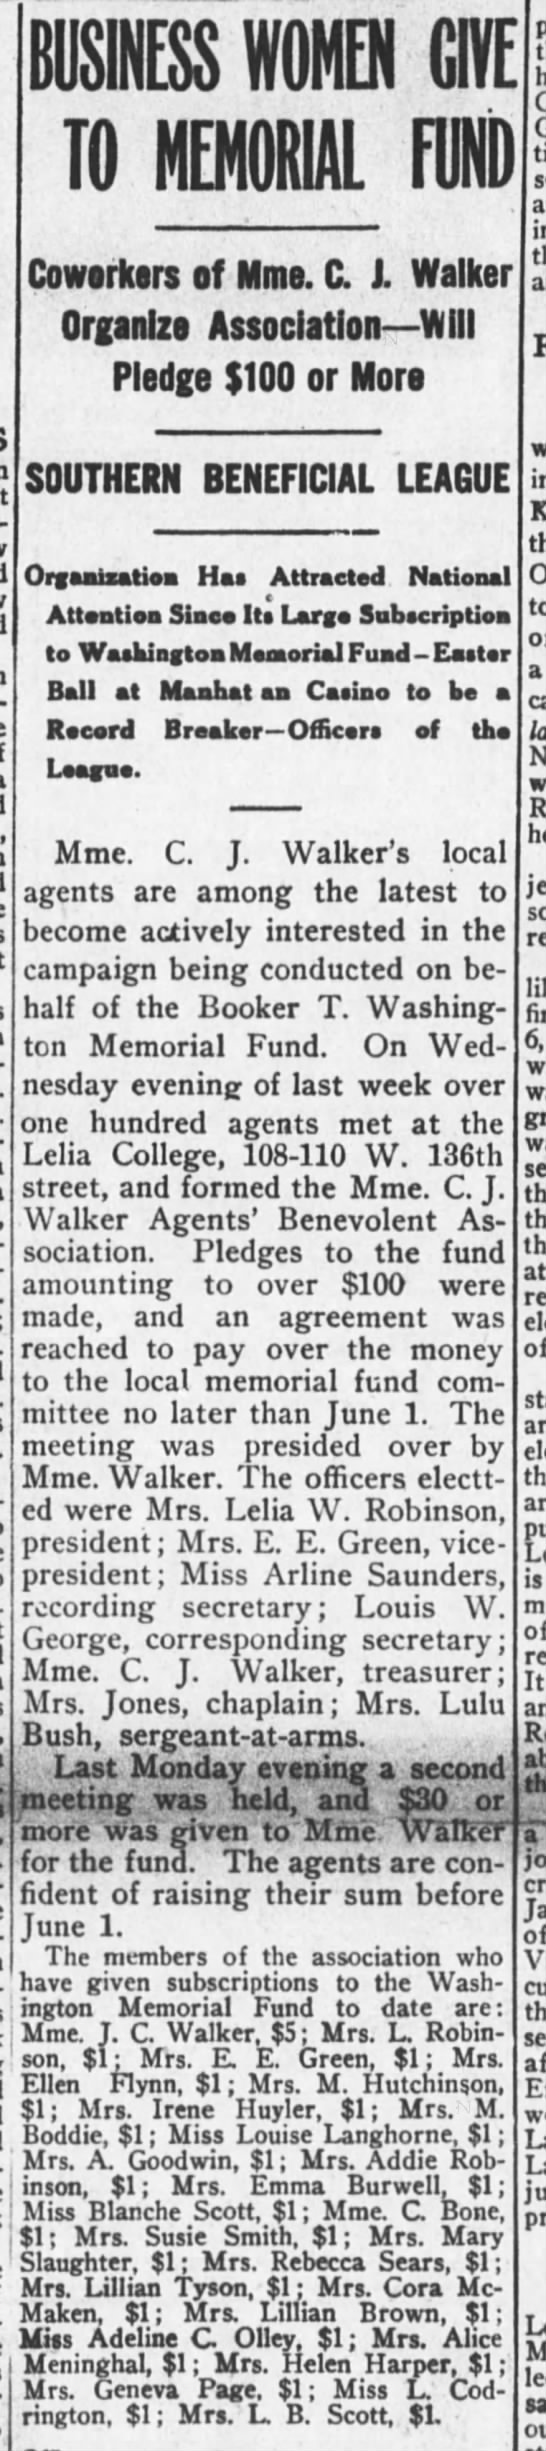 Madam C.J. Walker's employees donate to the Booker T. Washington Memorial Fund, 1916 - 